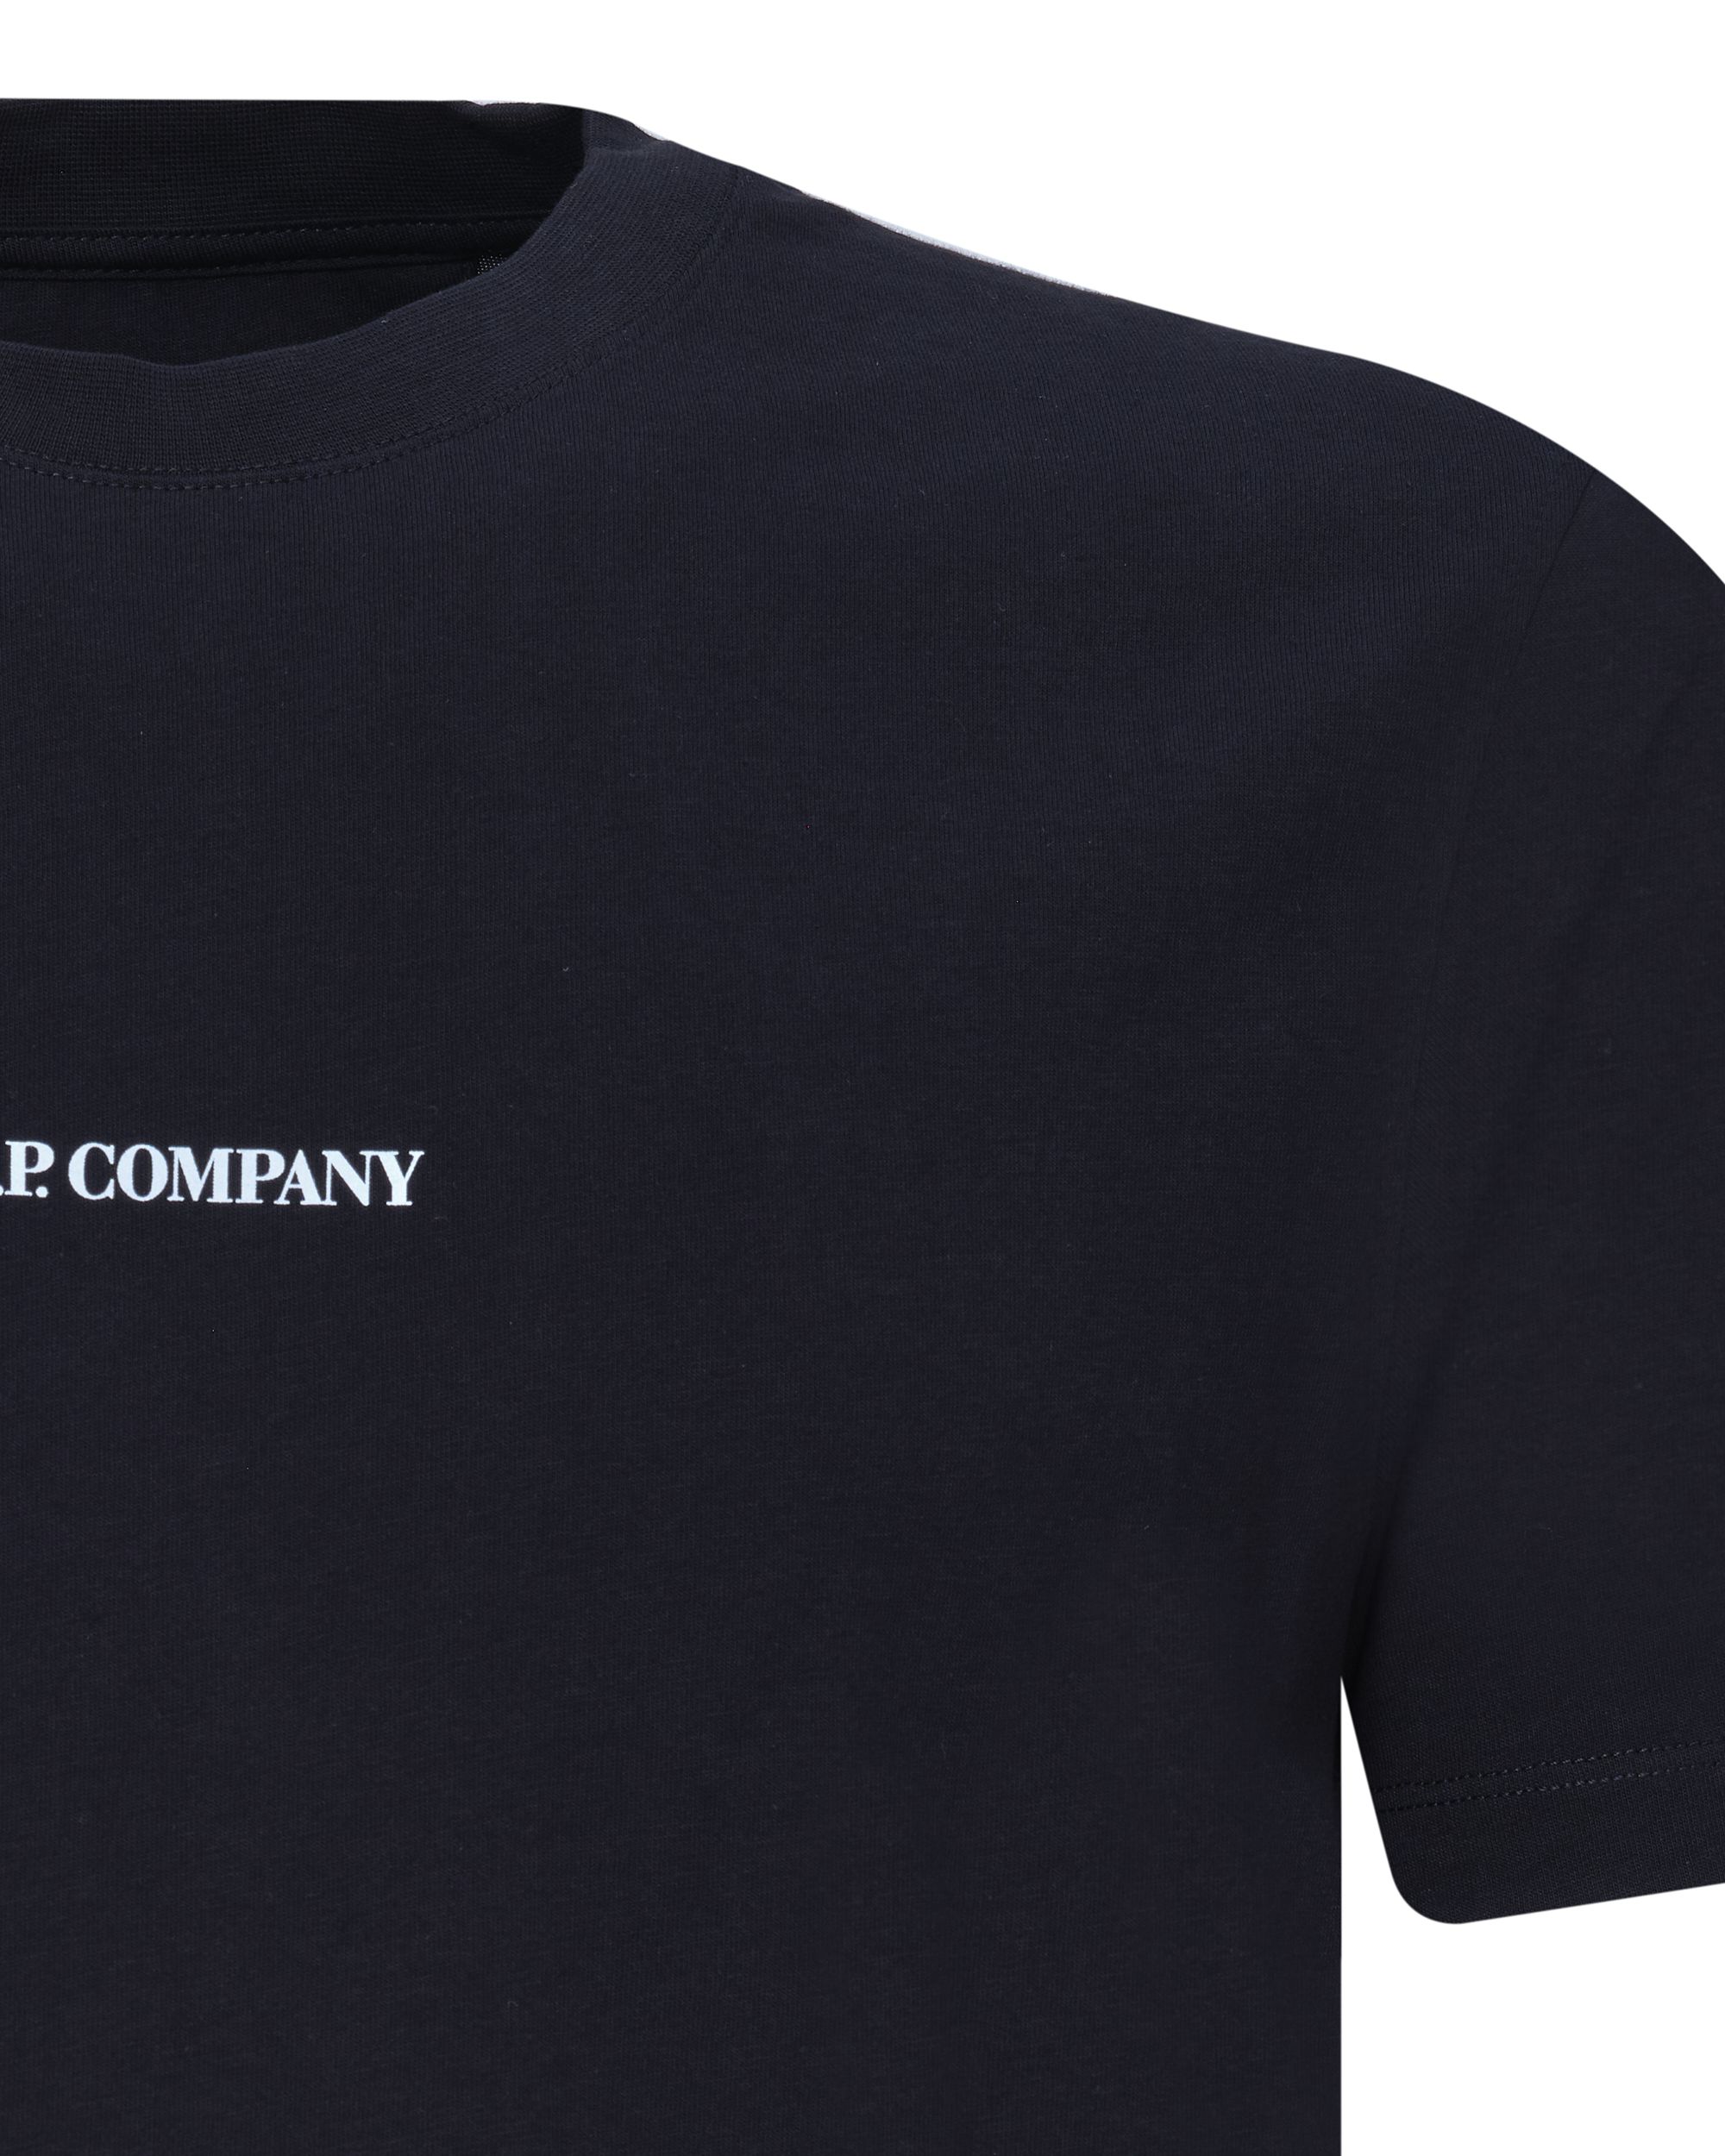 C.P Company T-shirt KM Zwart 078720-001-L